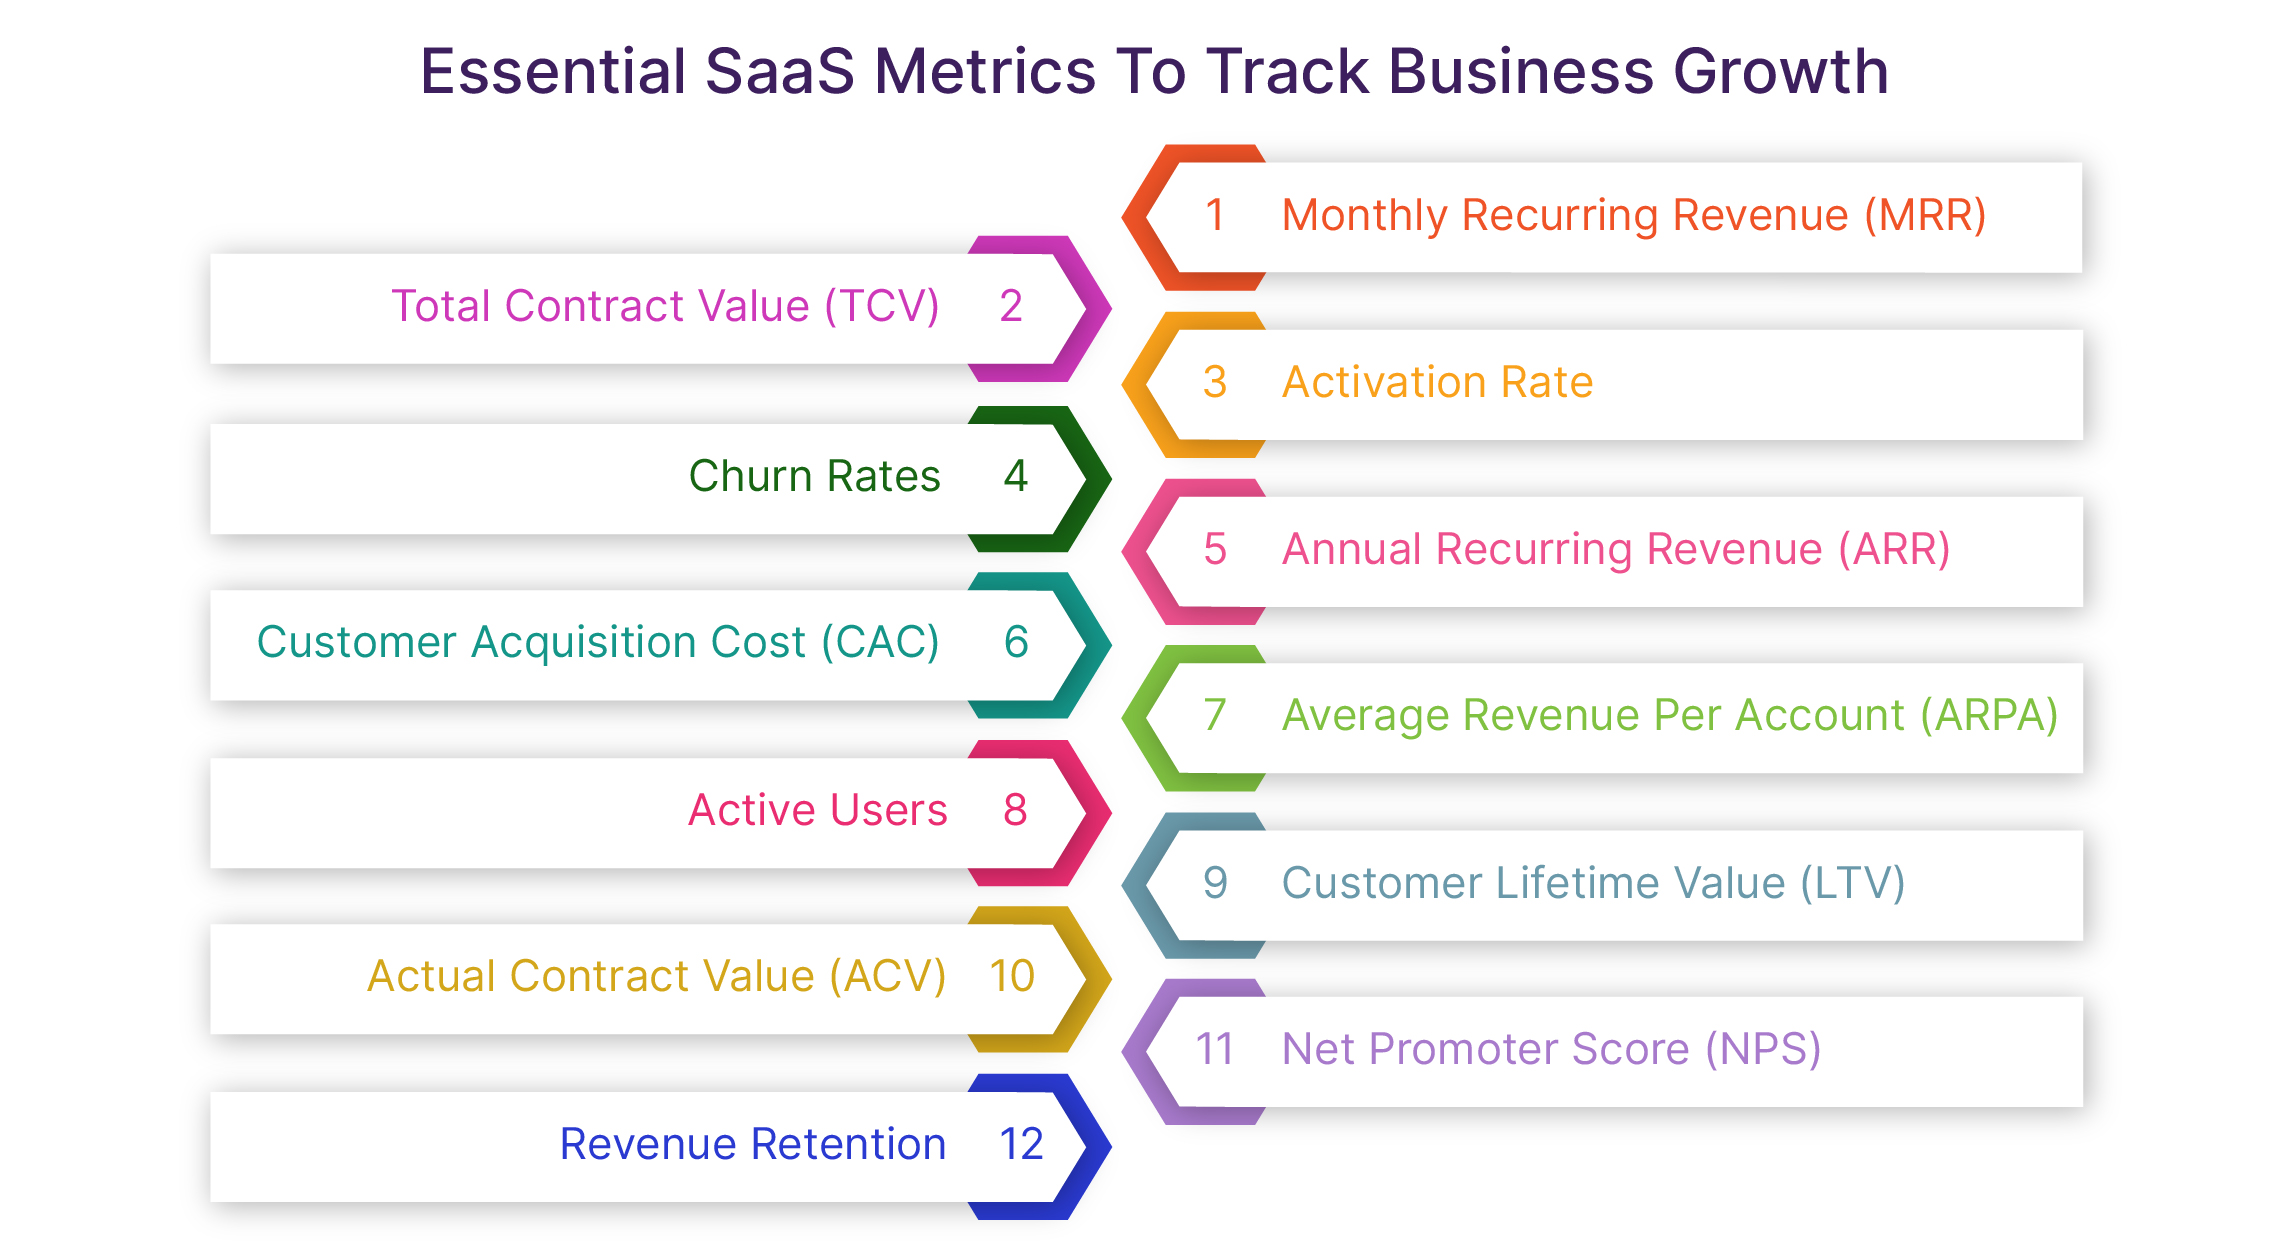 Essential SaaS Metrics To Track Business Growth